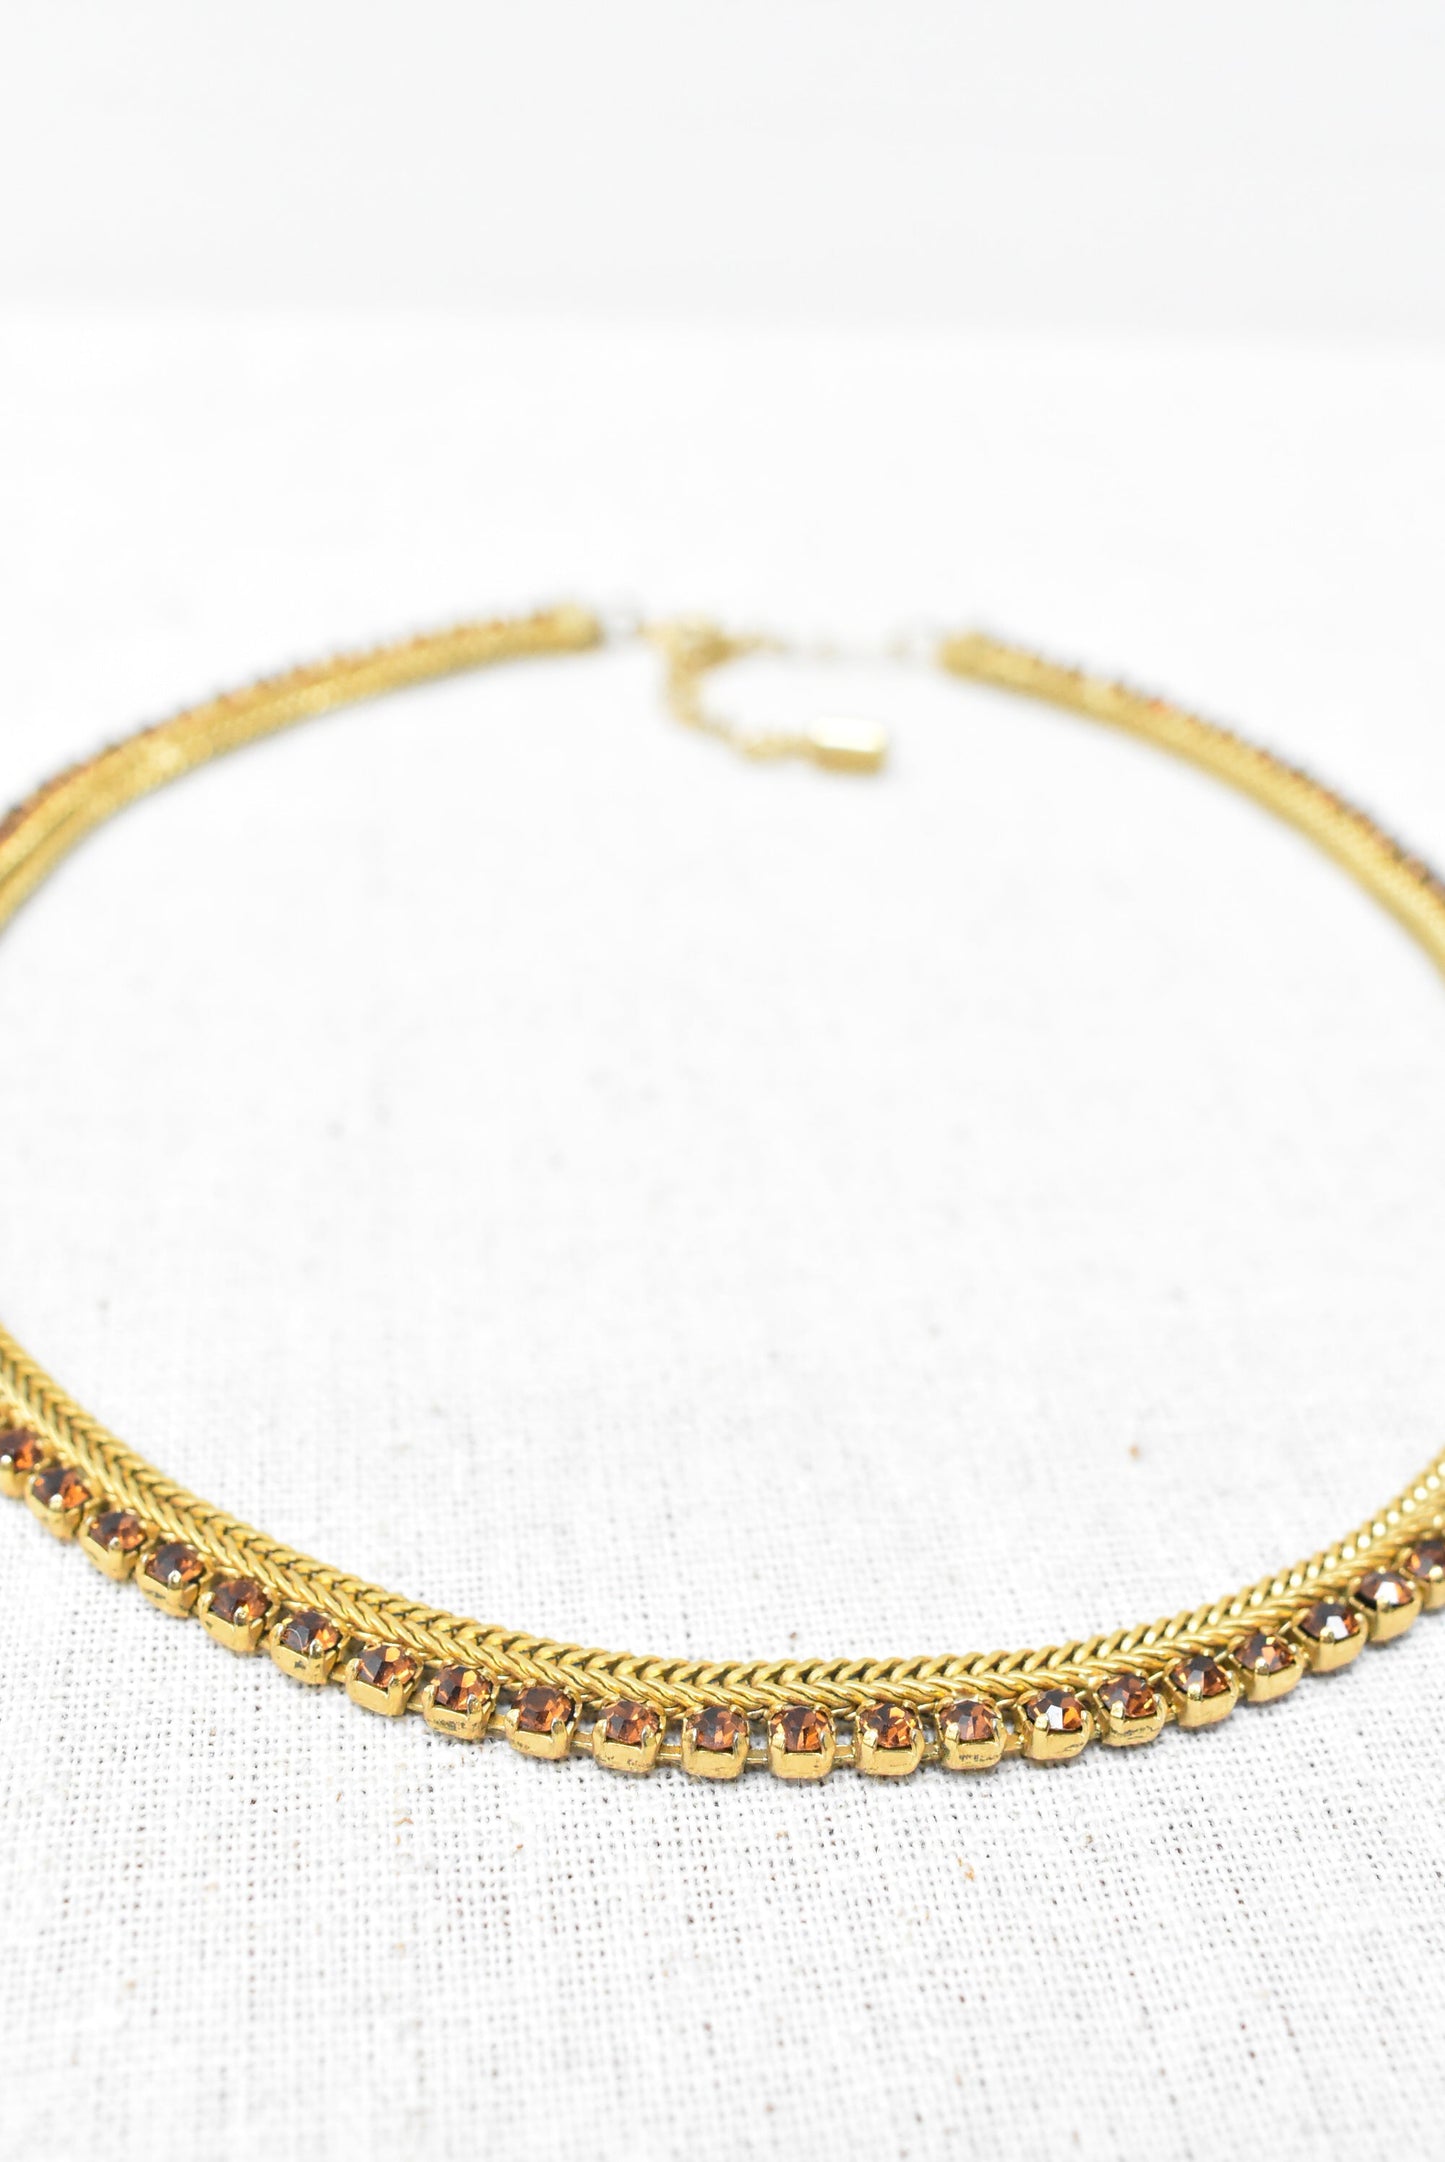 Vintage choker style golden diamante necklace